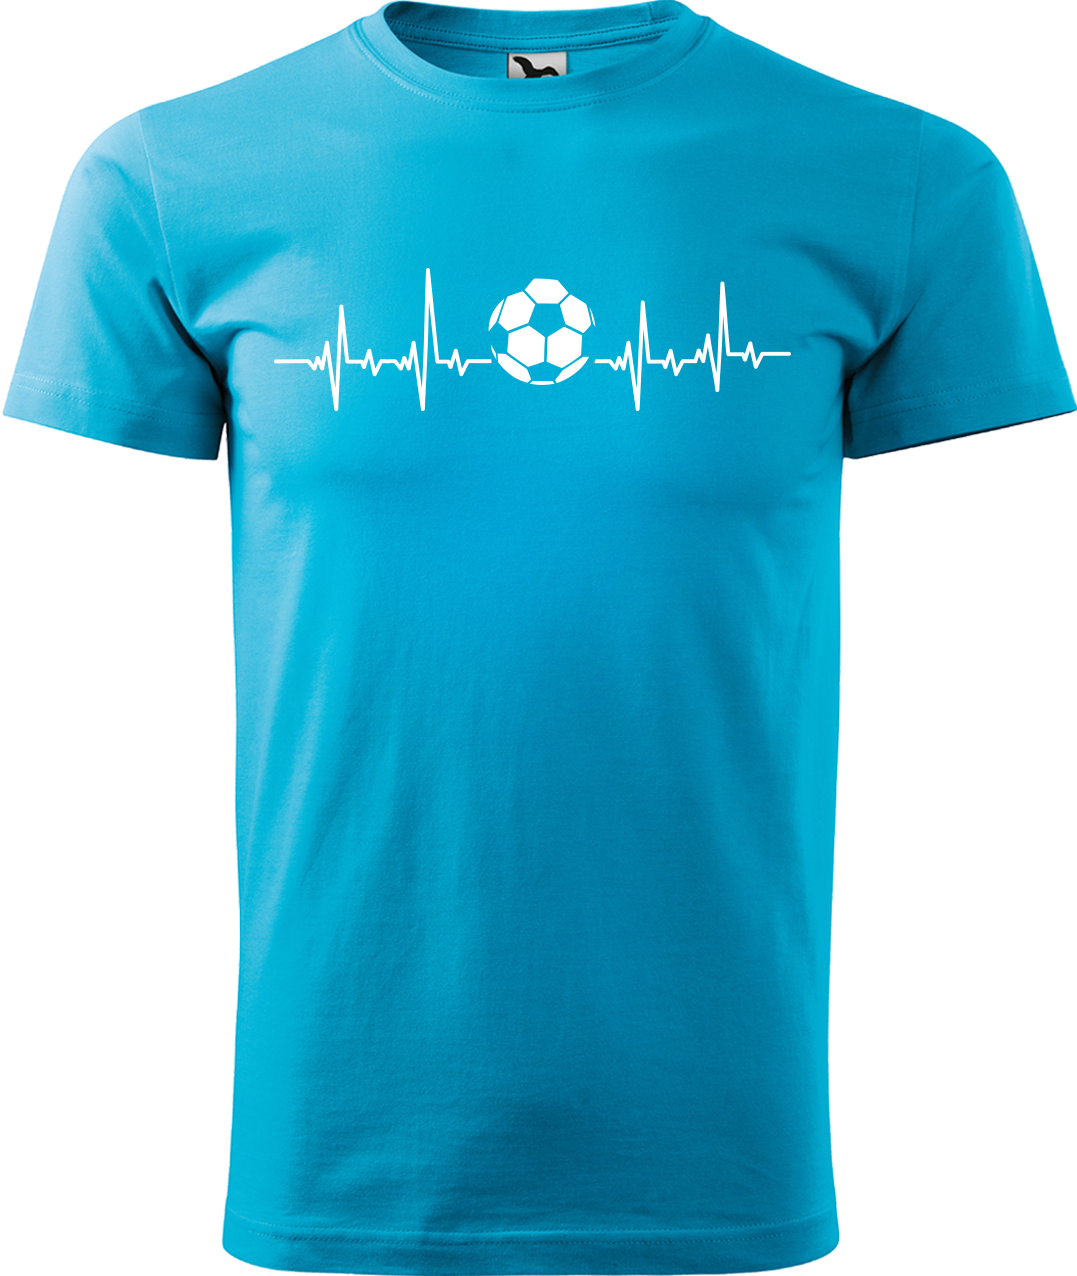 Tričko pro fotbalistu - Fotbalistův kardiogram Velikost: M, Barva: Tyrkysová (44)